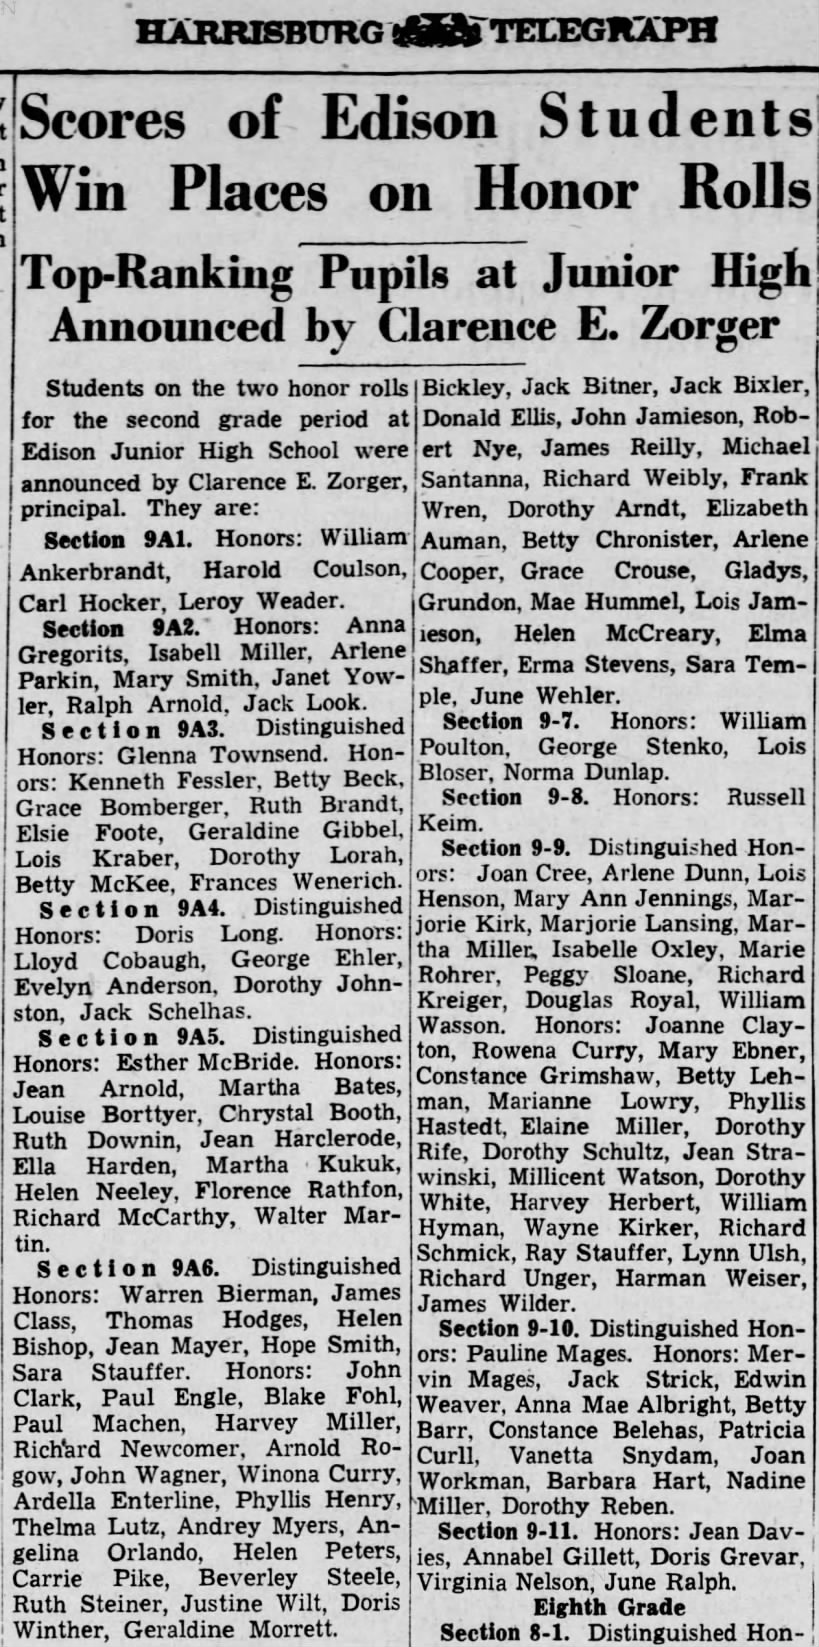 1938 Winona and Rowena Curry garner high honors